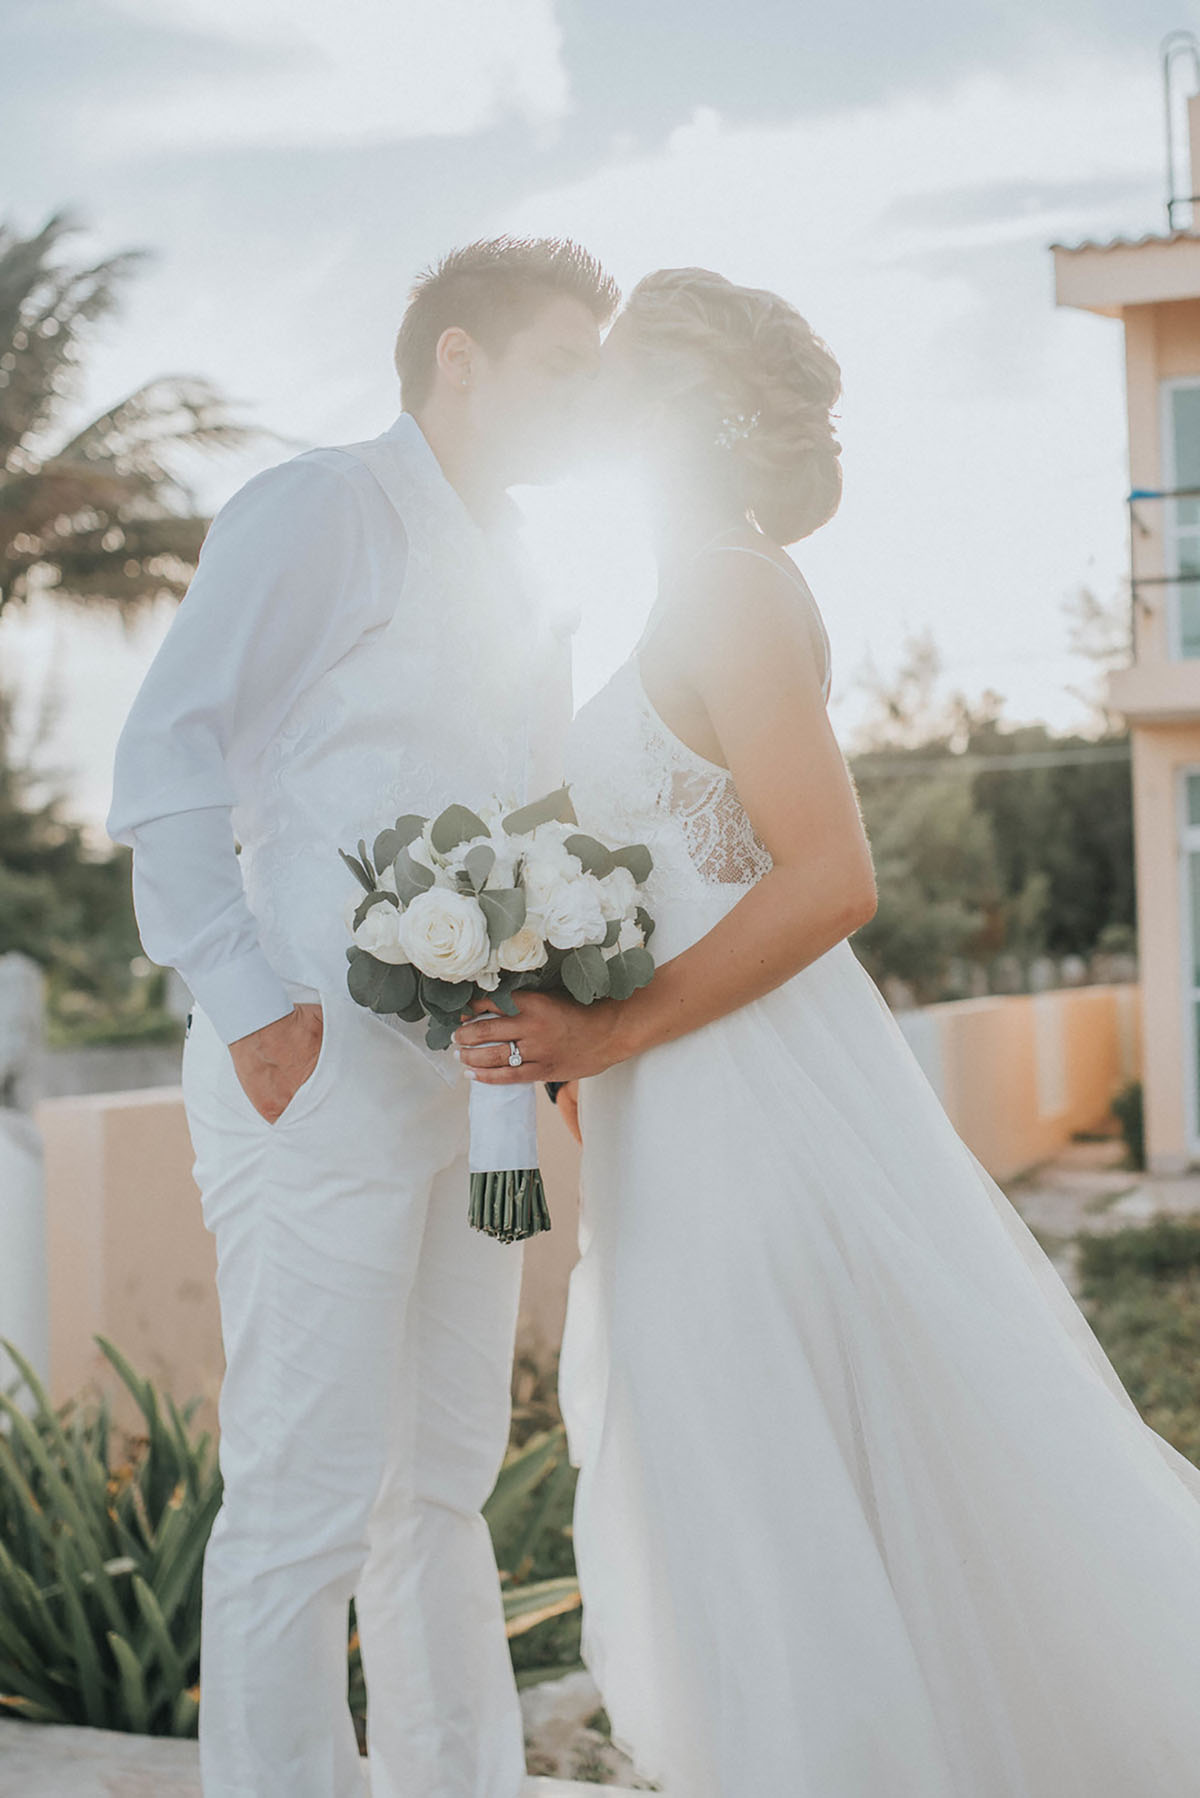 Cancun resort lesbian destination beach wedding Rachel Campbell Equally Wed brides kiss